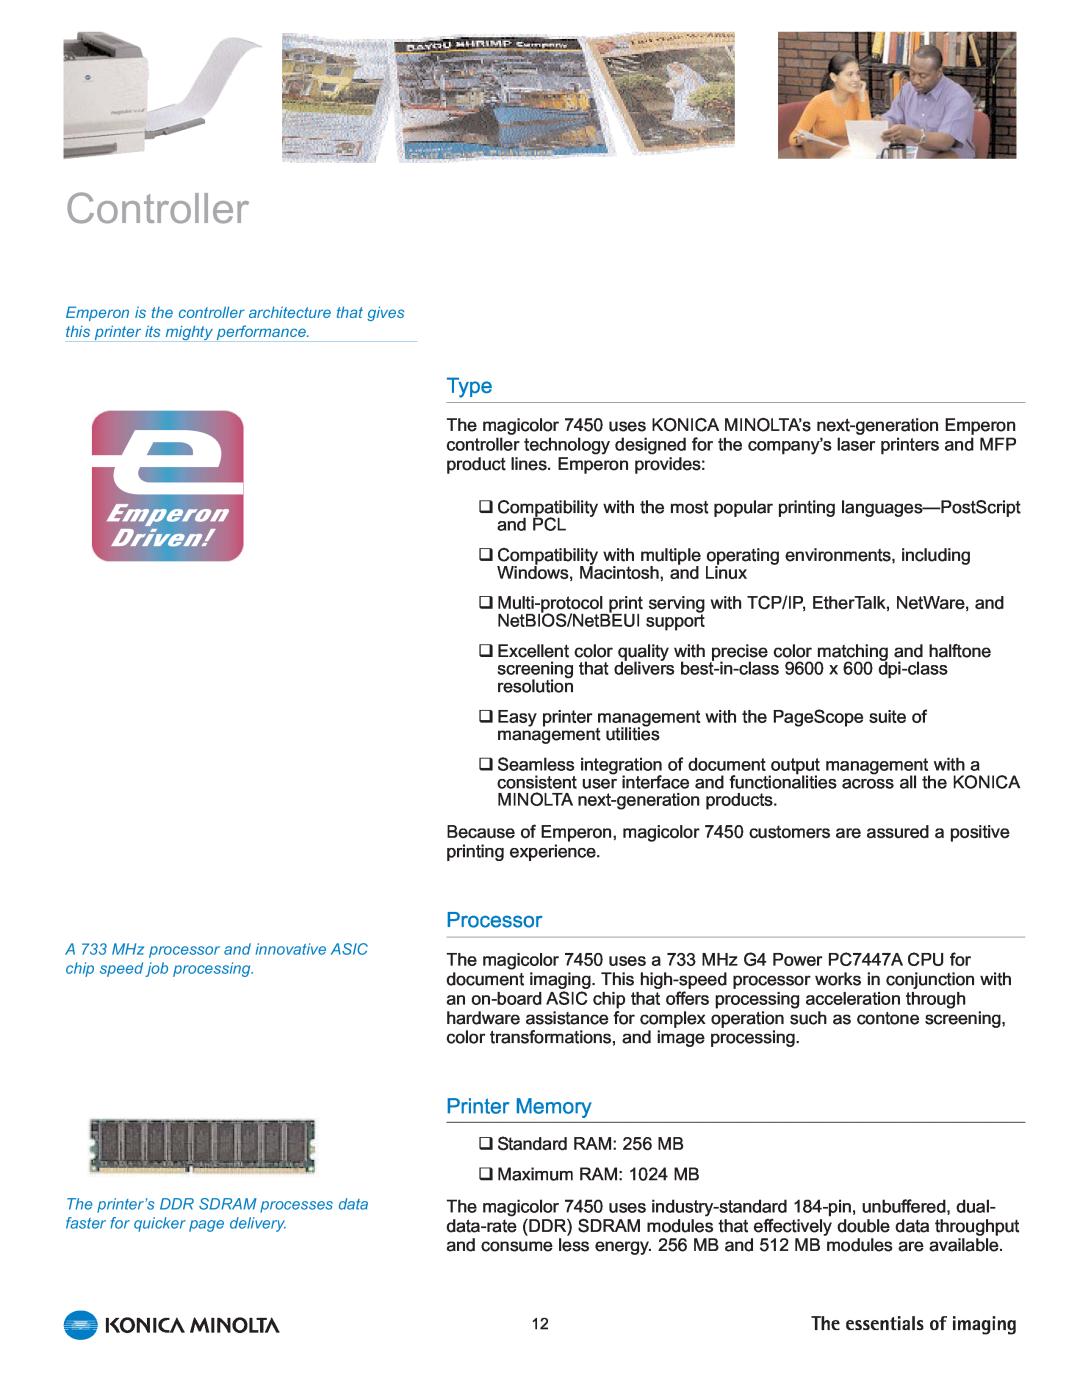 Konica Minolta 7450 manual Controller, Processor, Printer Memory, Type 